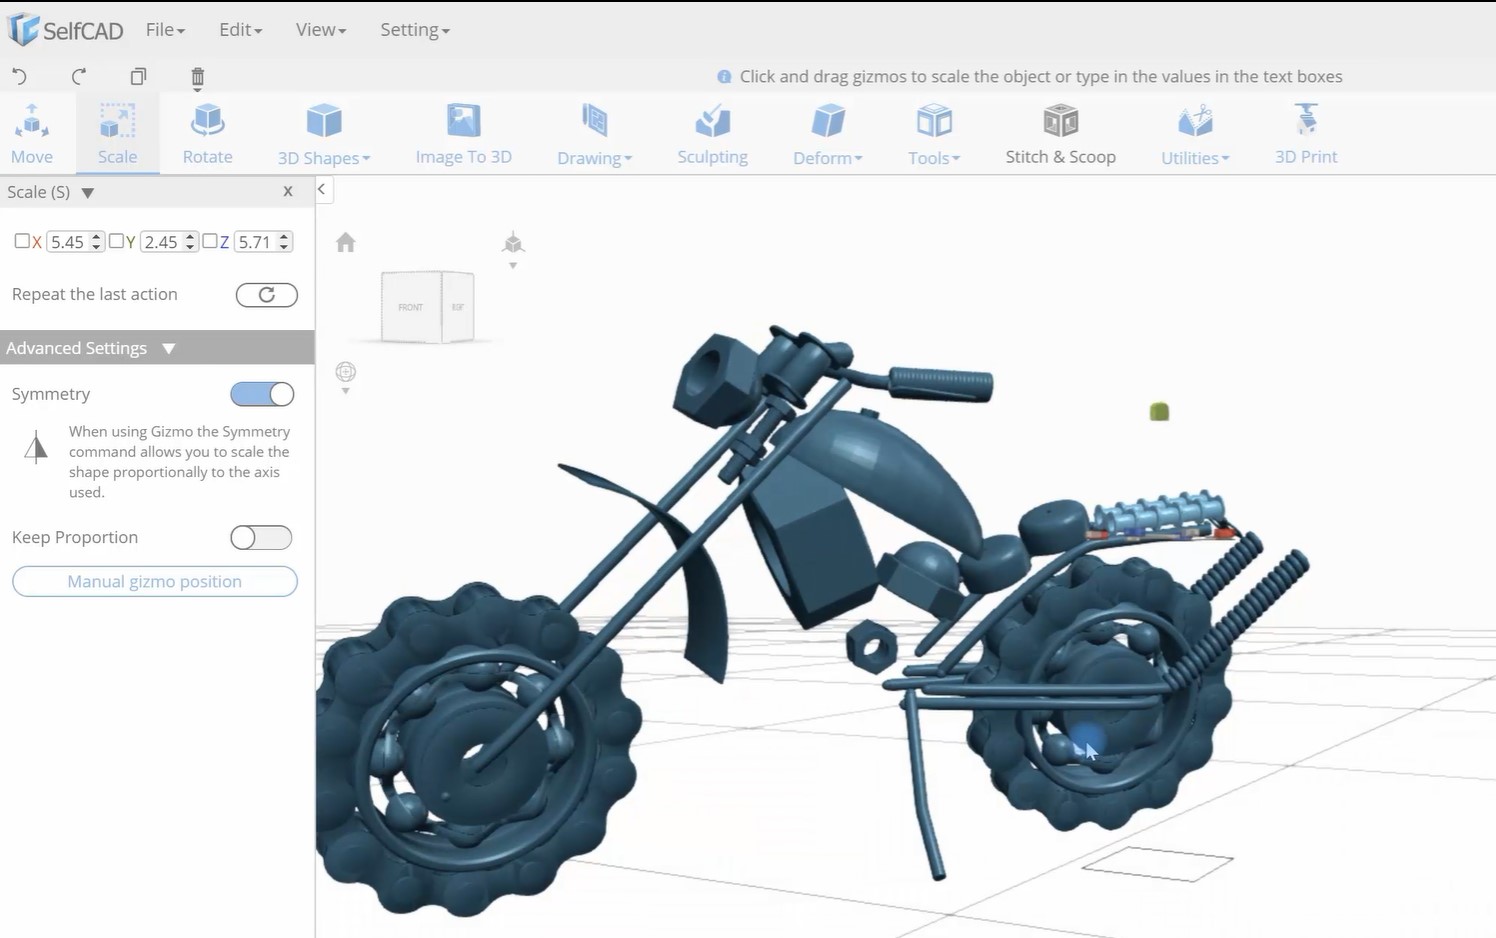 Mejor software de impresión 3D: SelfCAD